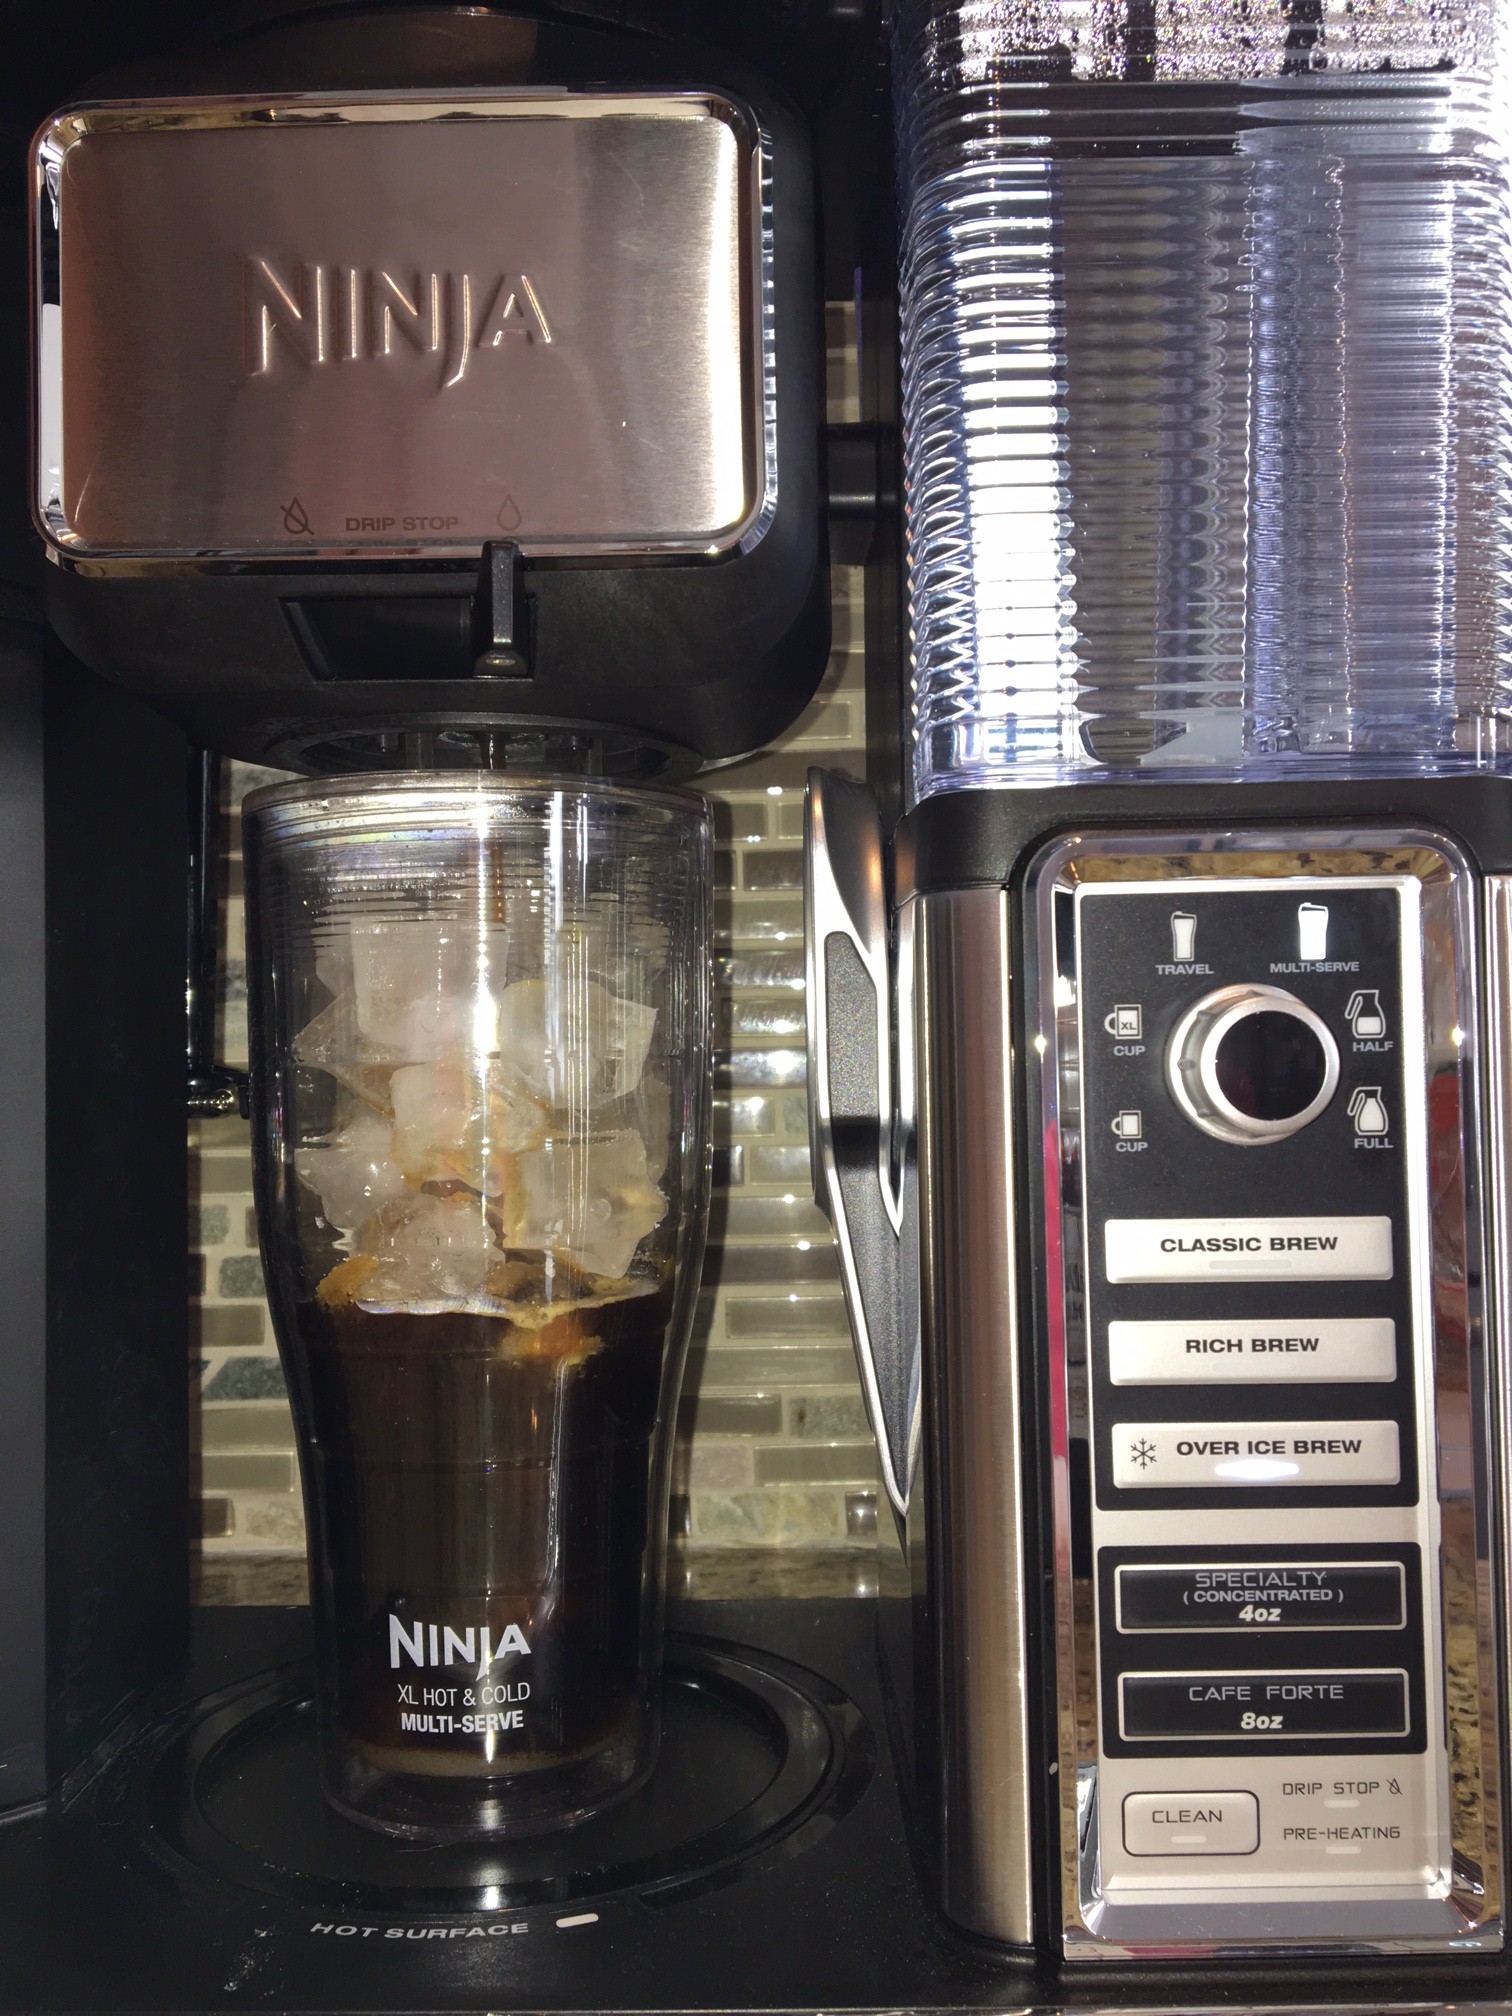 http://wagonpilot.com/wp-content/uploads/2016/12/Ninja-Iced-Coffee.jpg